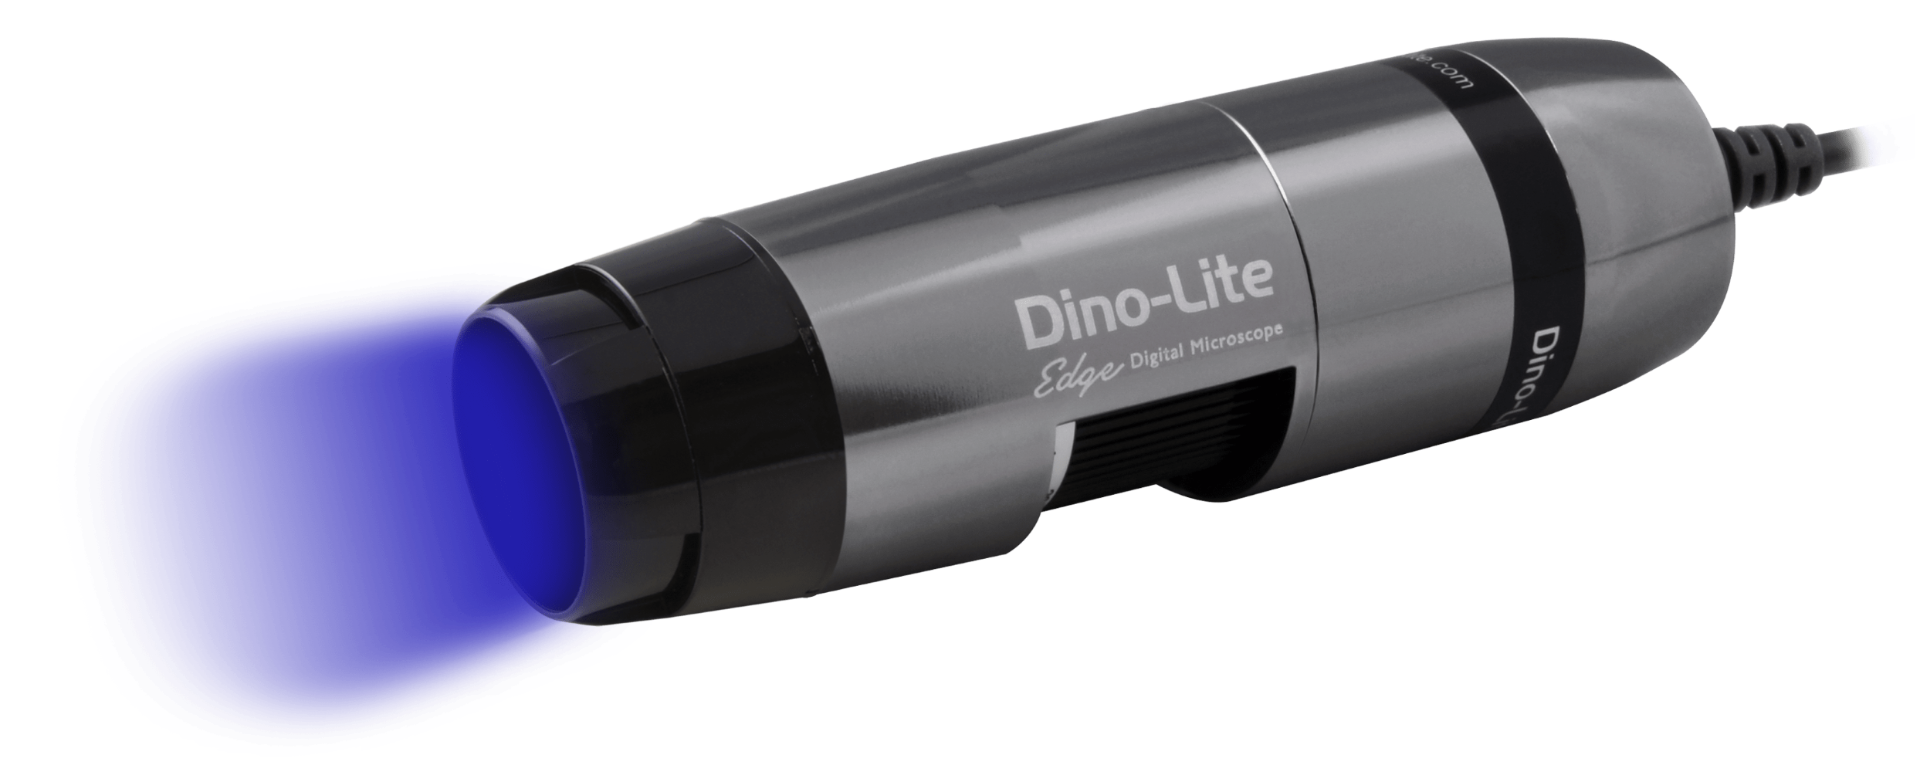 Dino-Lite AM7115MT-FUW Microscope, UV LED 375nm, 20-220x